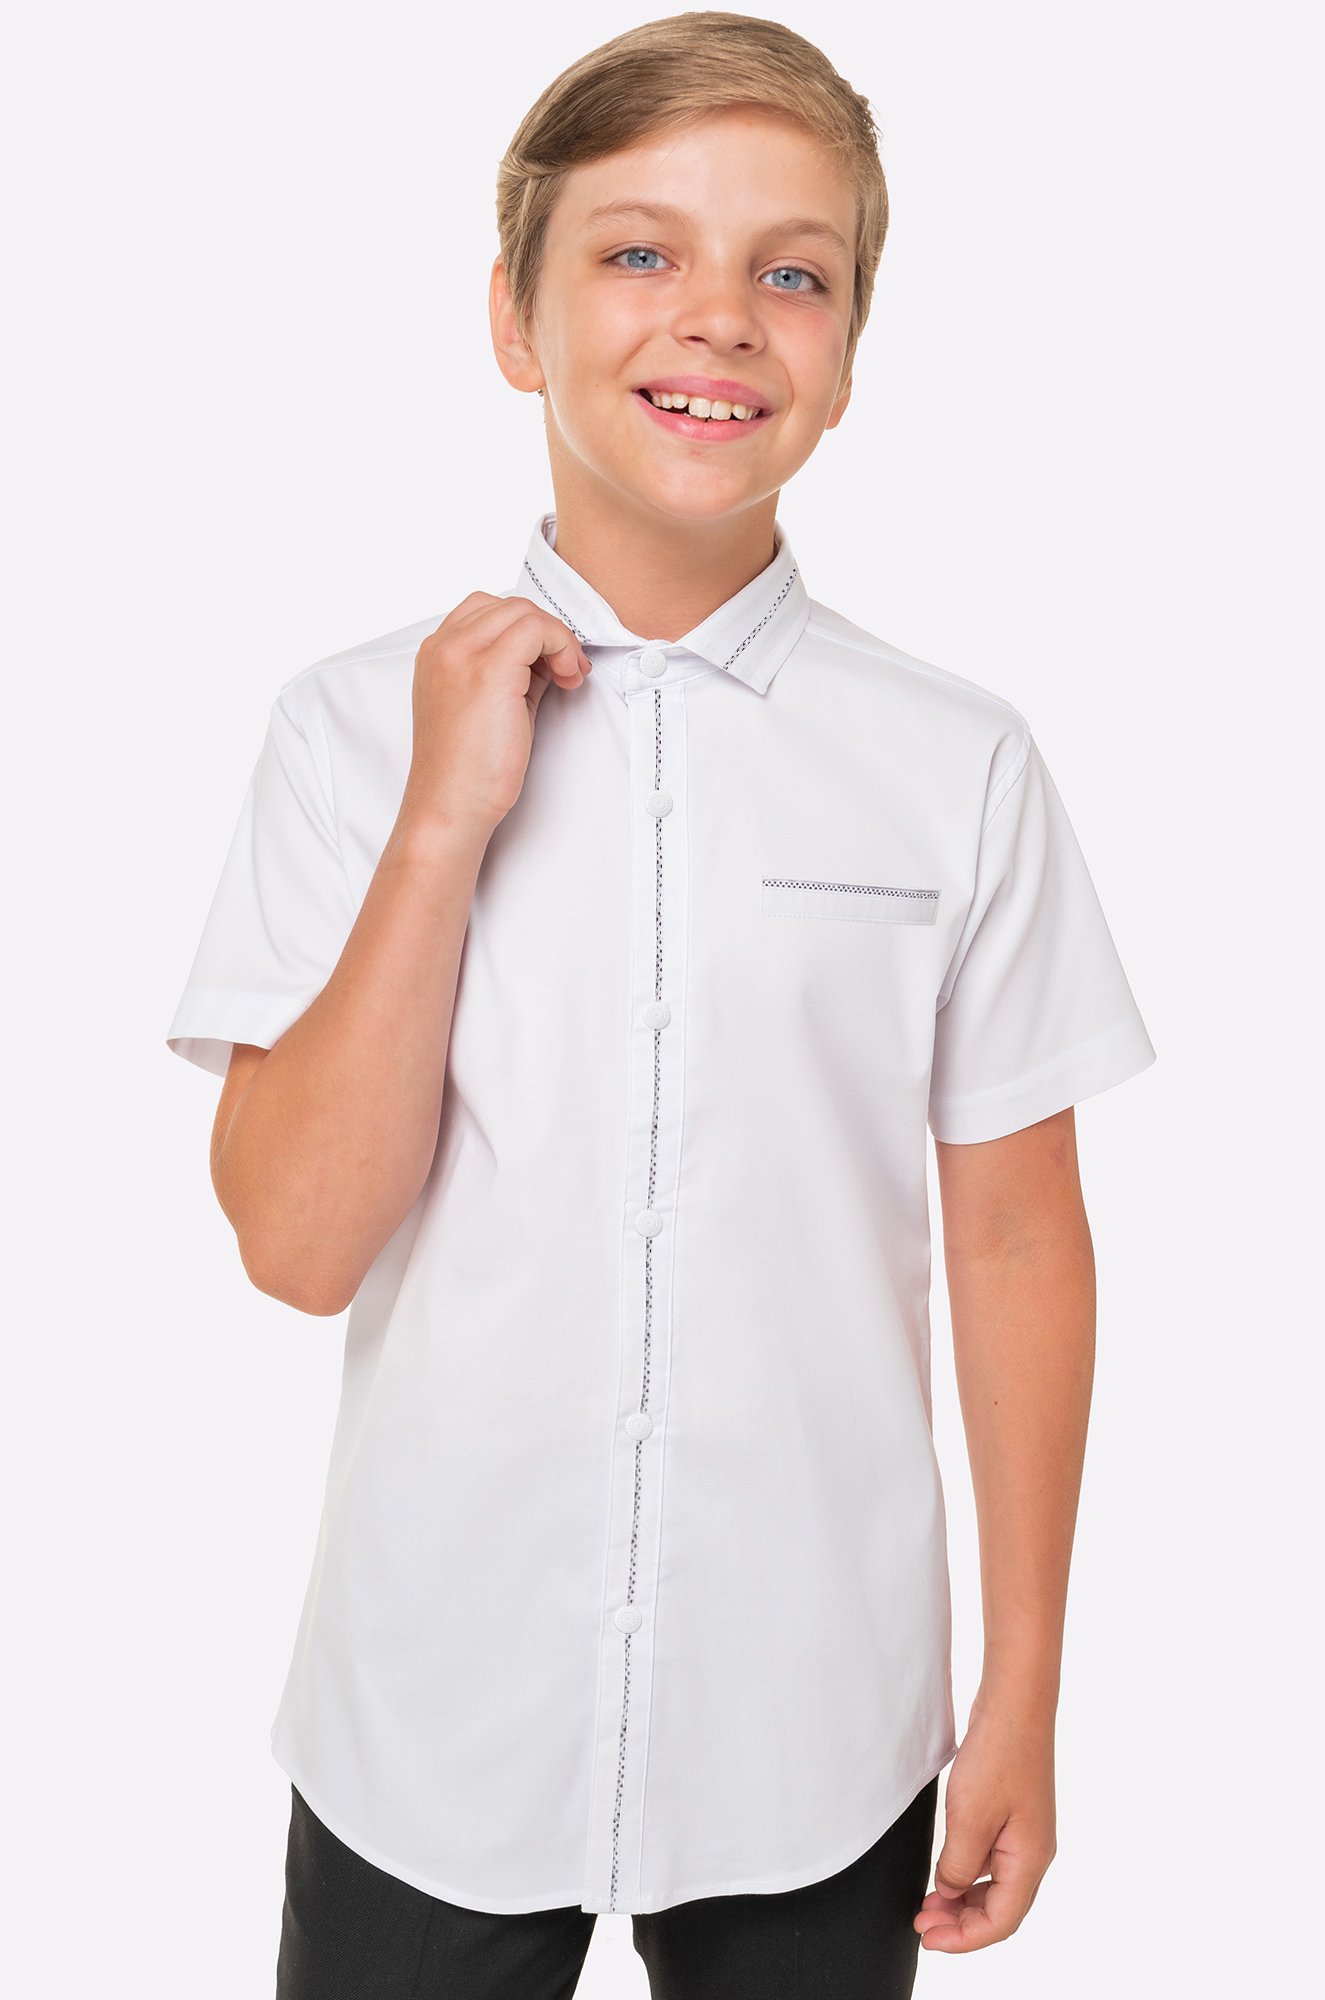 Рубашка для мальчика на кнопках NJN